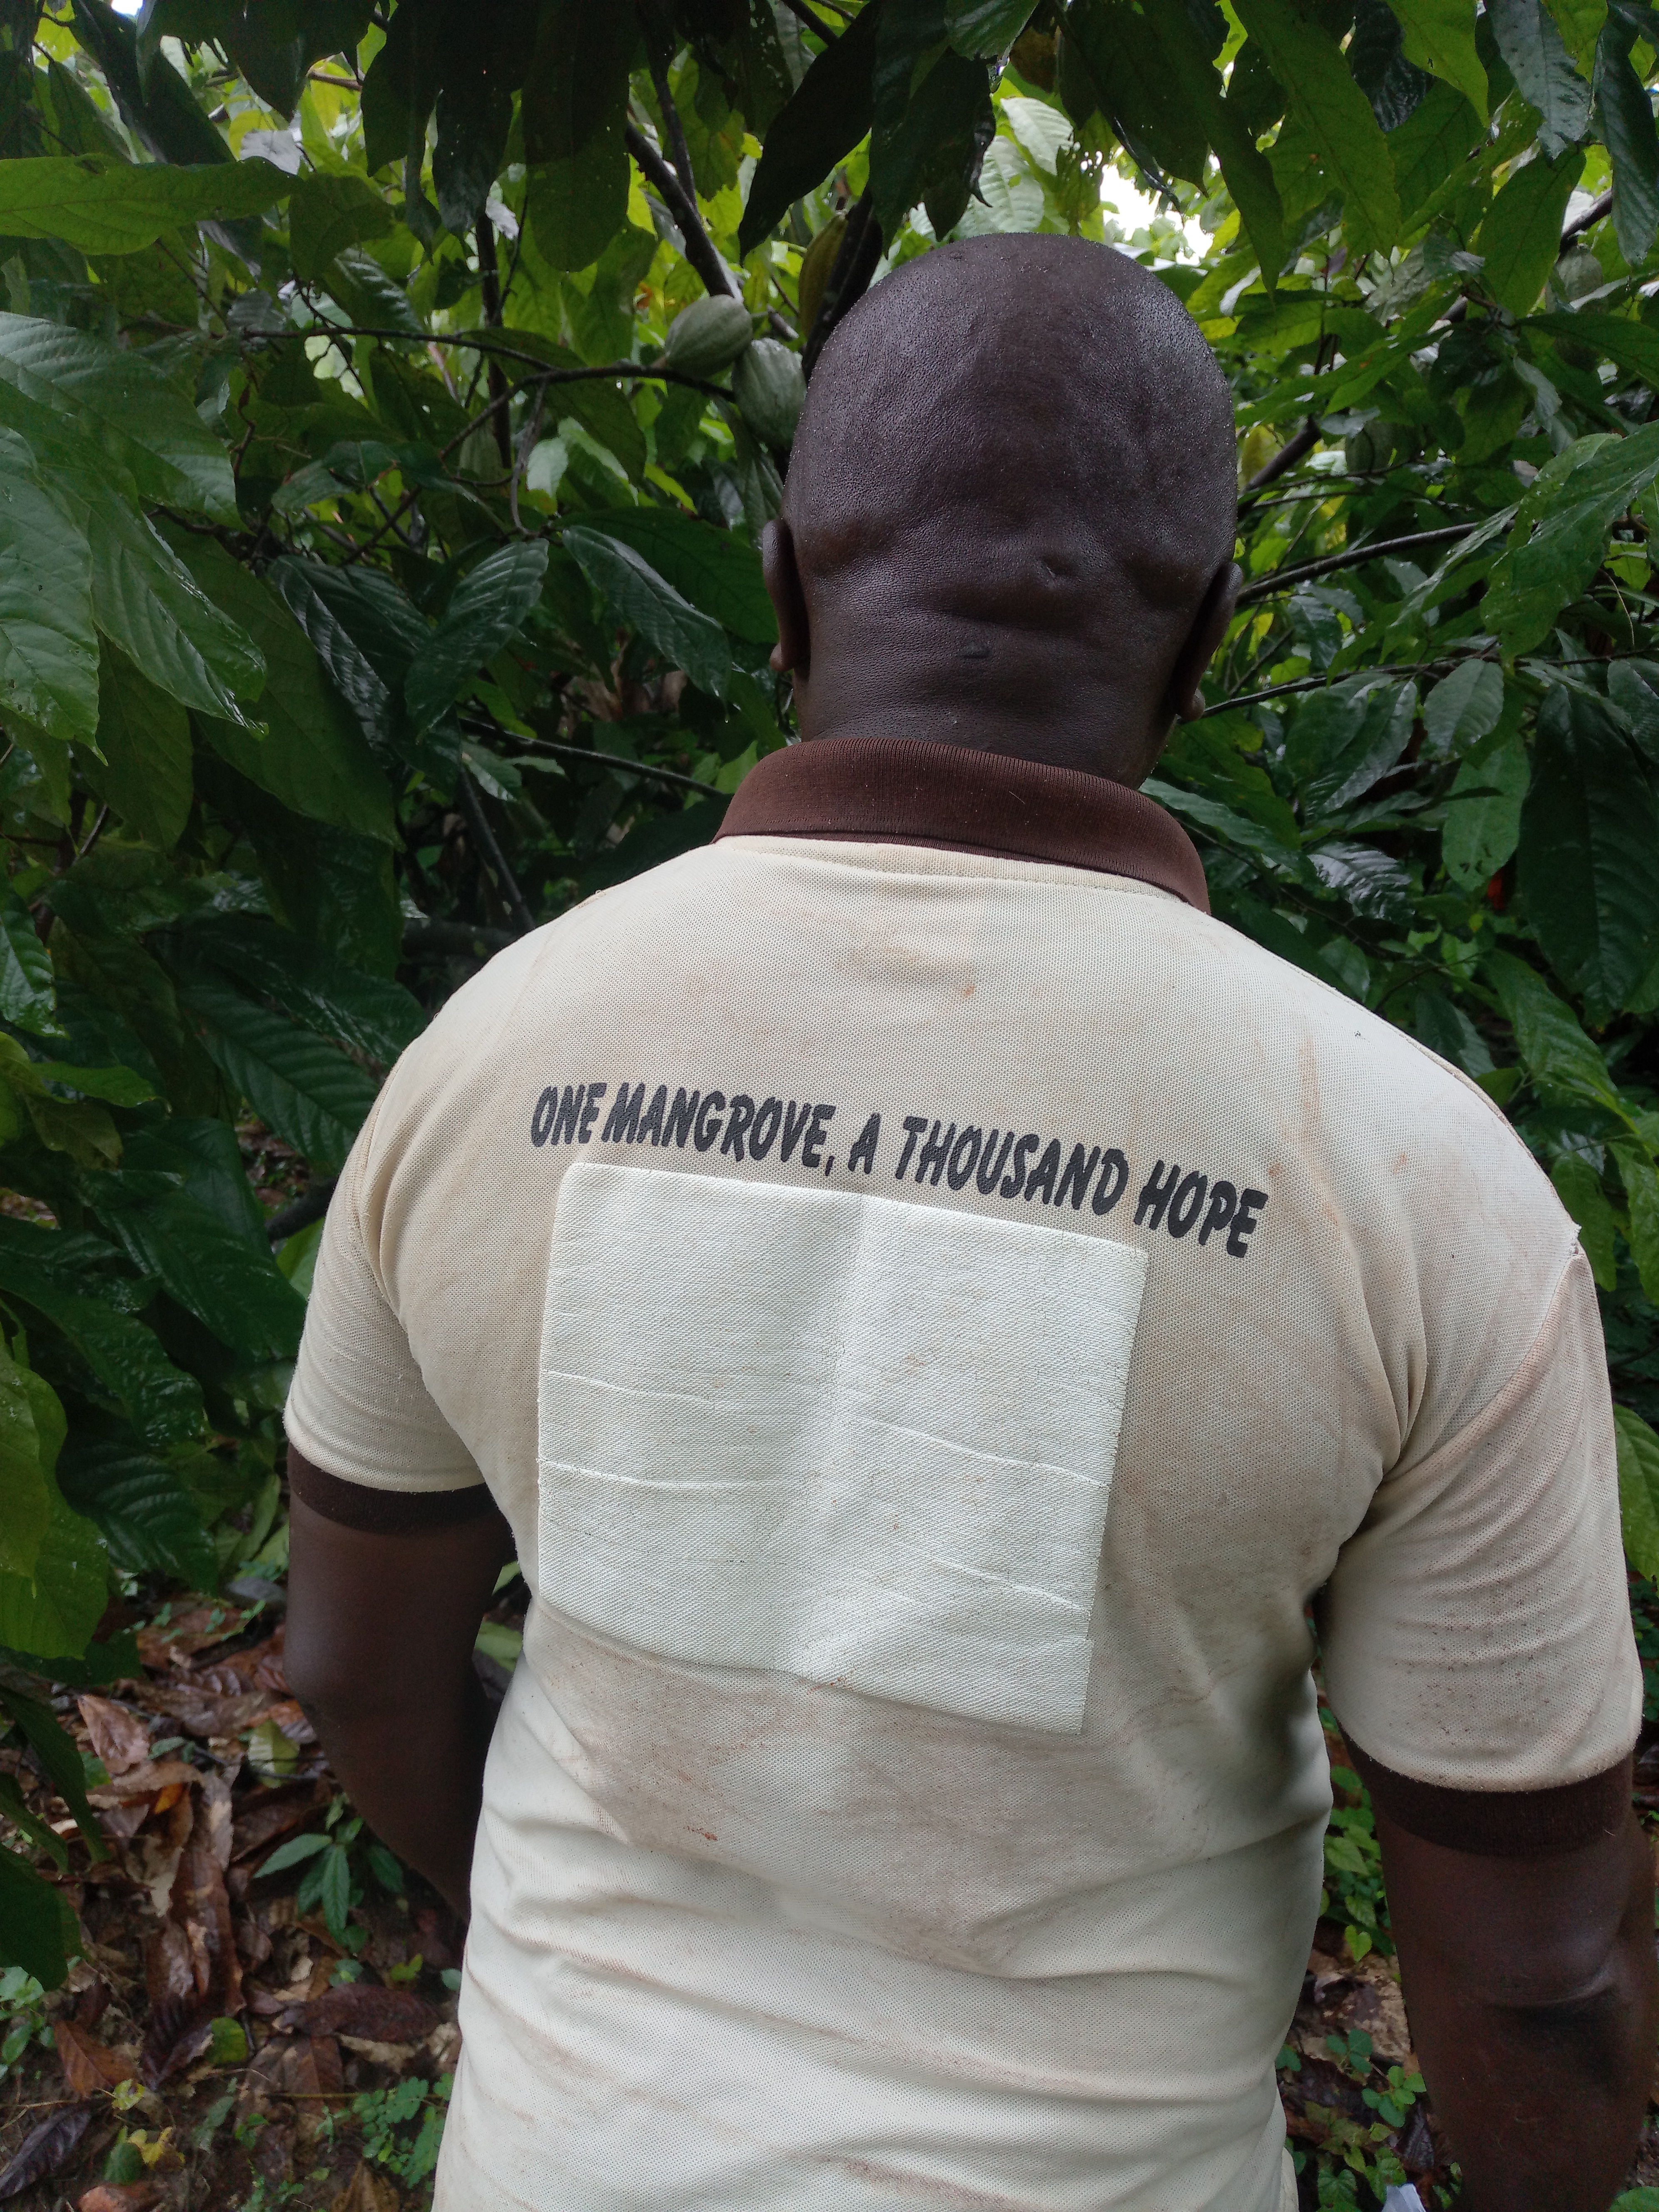 &quot;One mangrove, a thousand hopes&quot;- mangrove rehabilitation in Nigeria